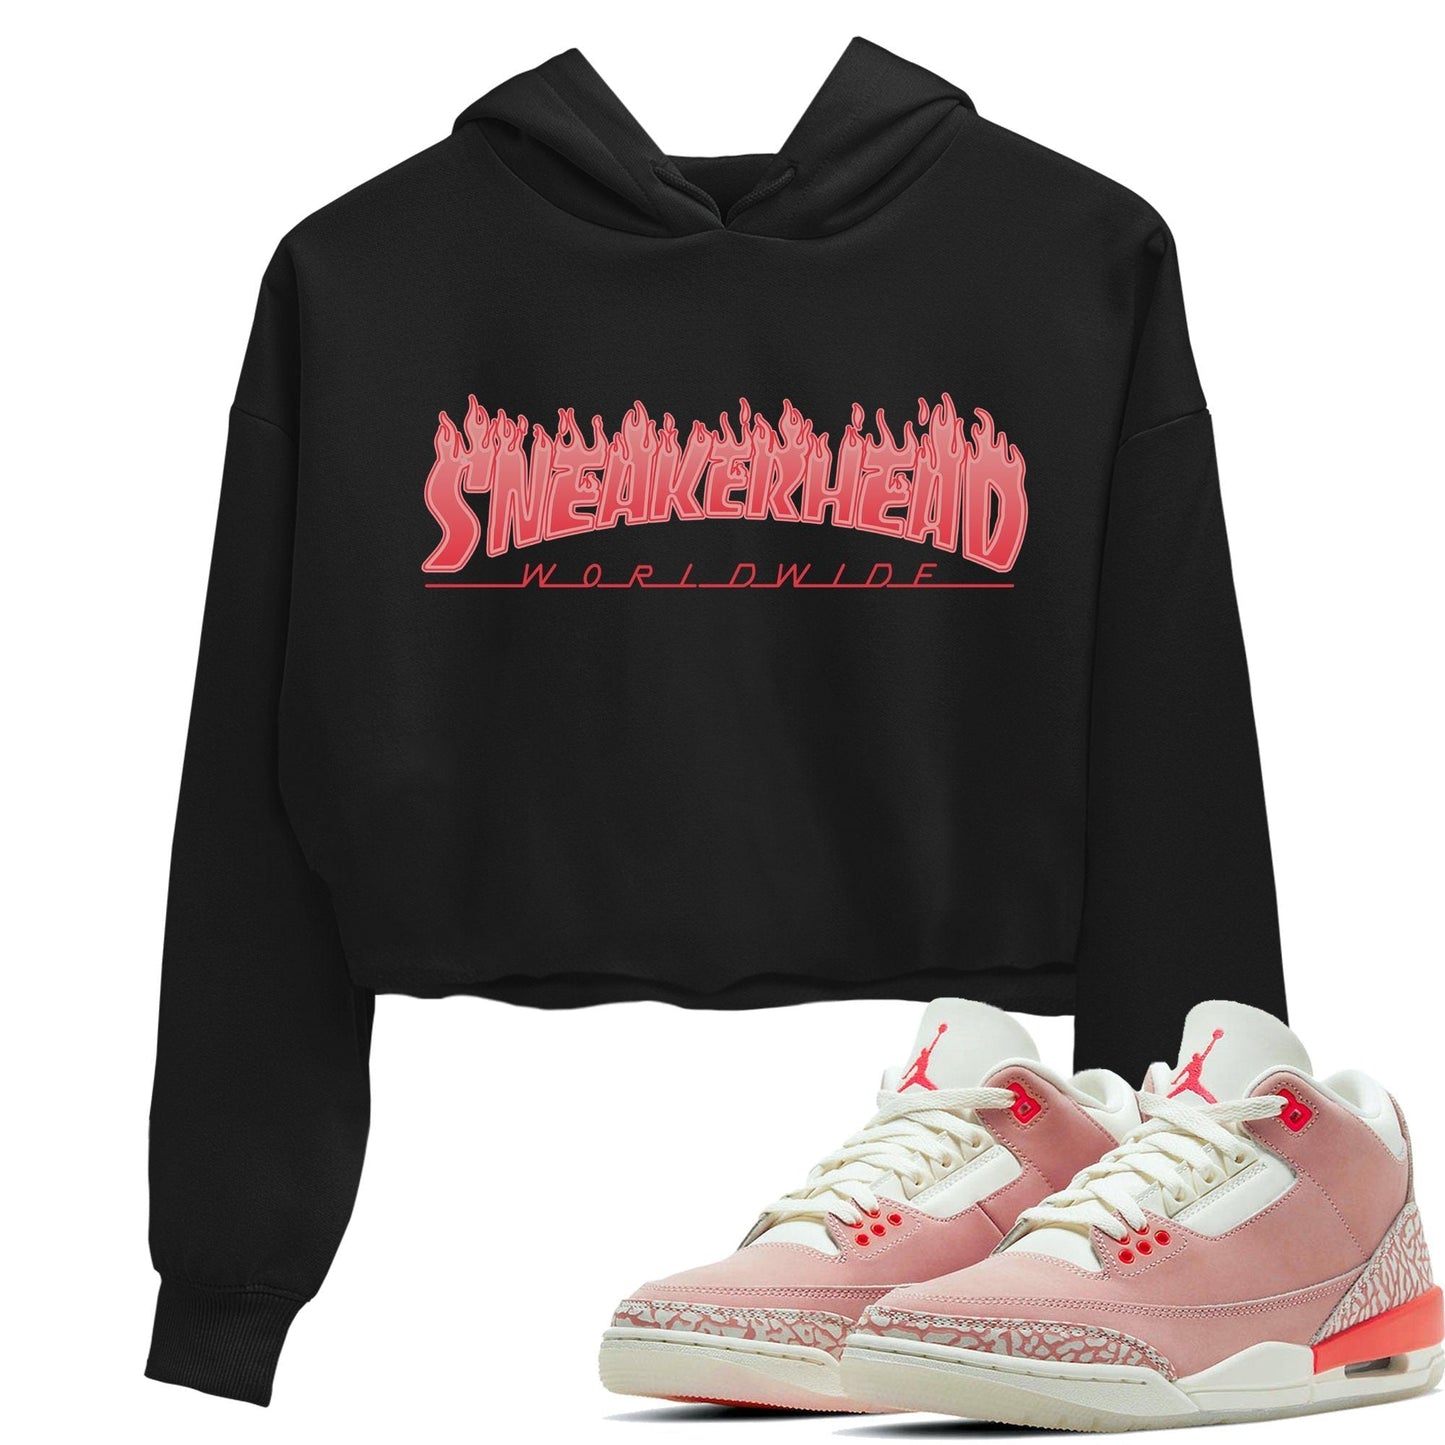 Jordan 3 Rust Pink Sneaker Tees Drip Gear Zone Fire Sneakerhead Sneaker Tees Jordan 3 Rust Pink Shirt Women's Shirts